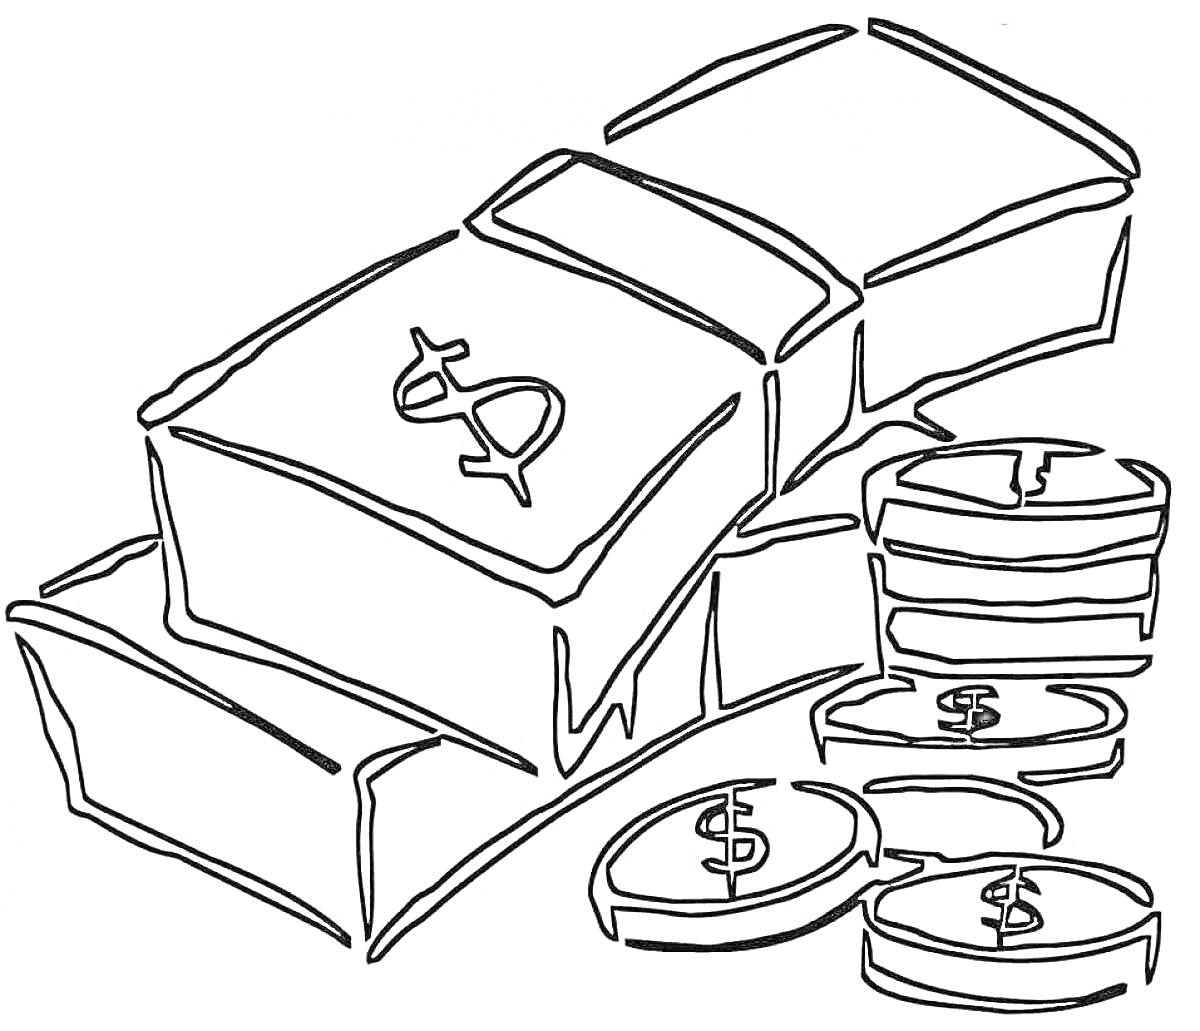 Пачки денег и монеты с символами доллара